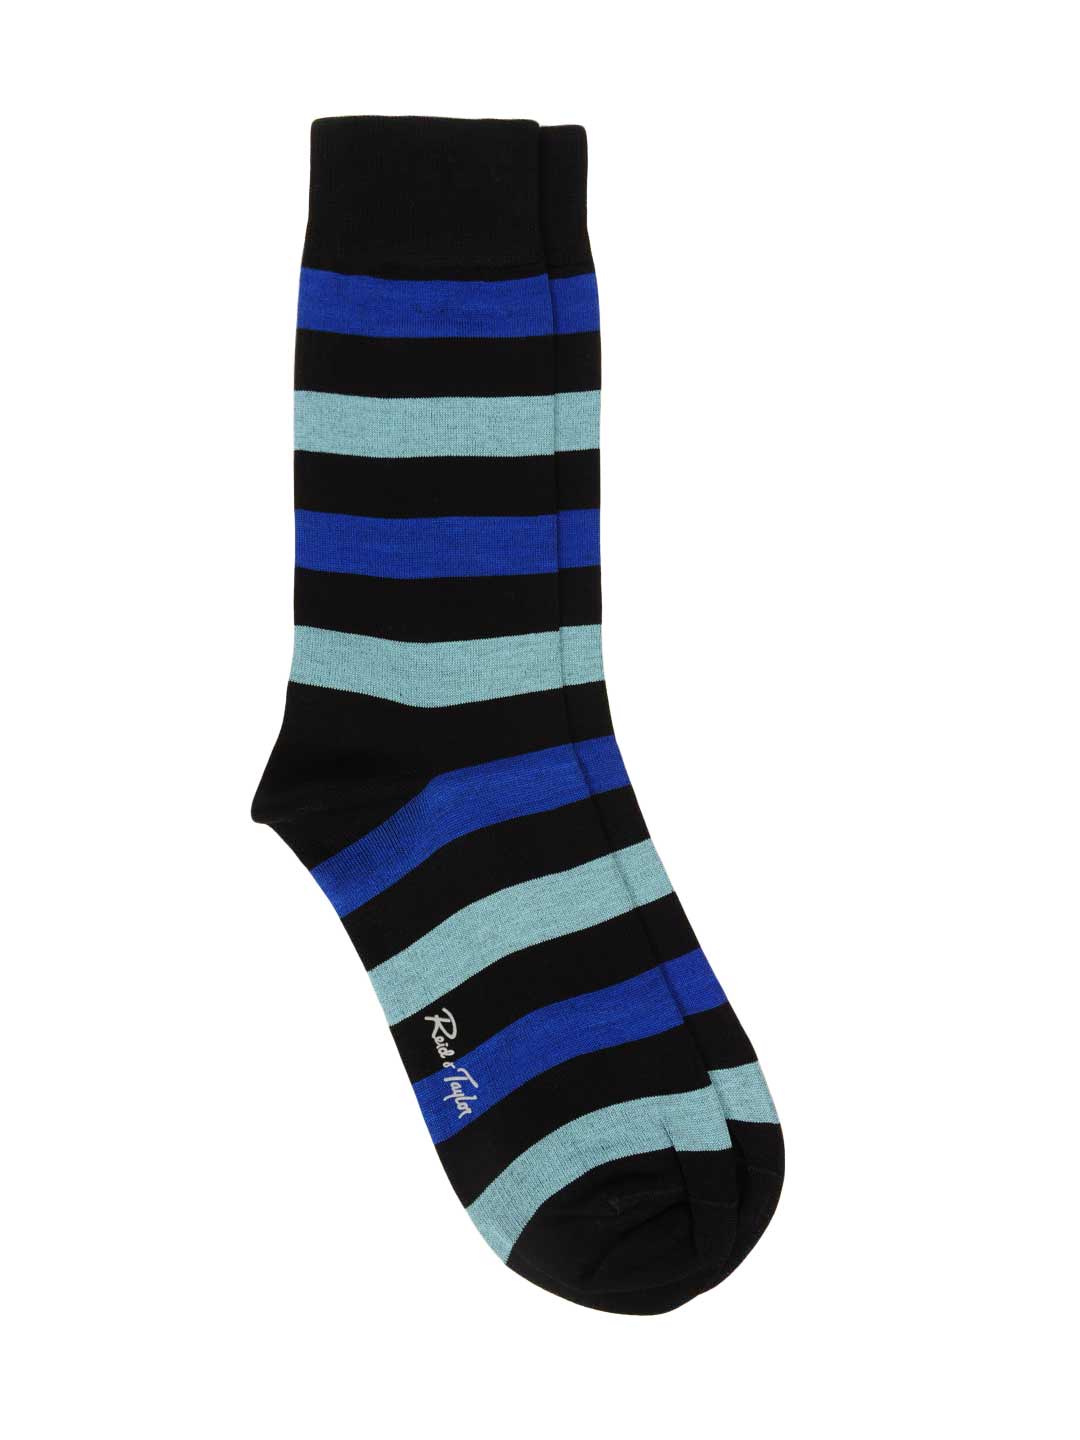 Reid & Taylor Men Black & Blue Socks